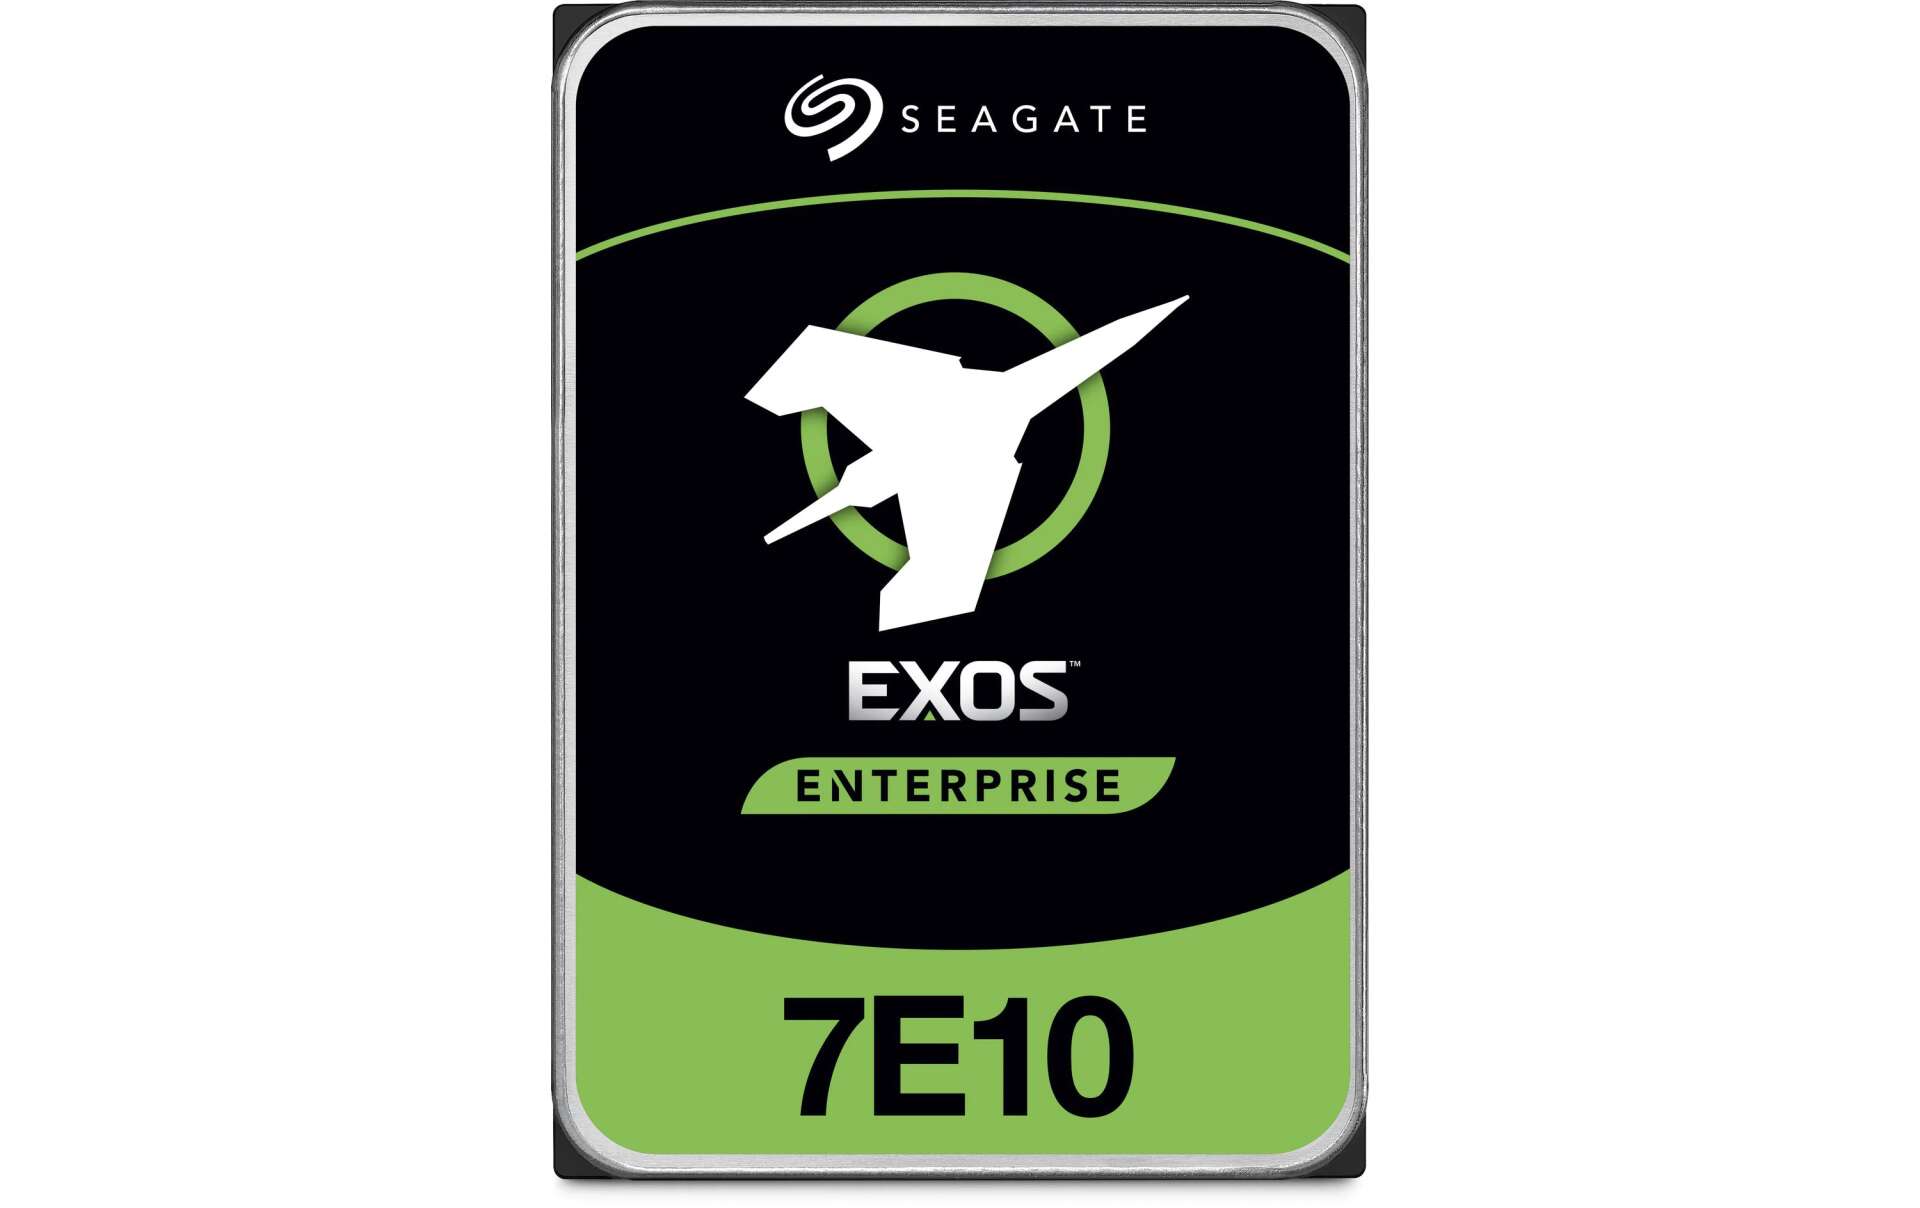 Seagate 4tb exos 7e10 (512e/4kn standard) sata3 3.5" dvr hdd